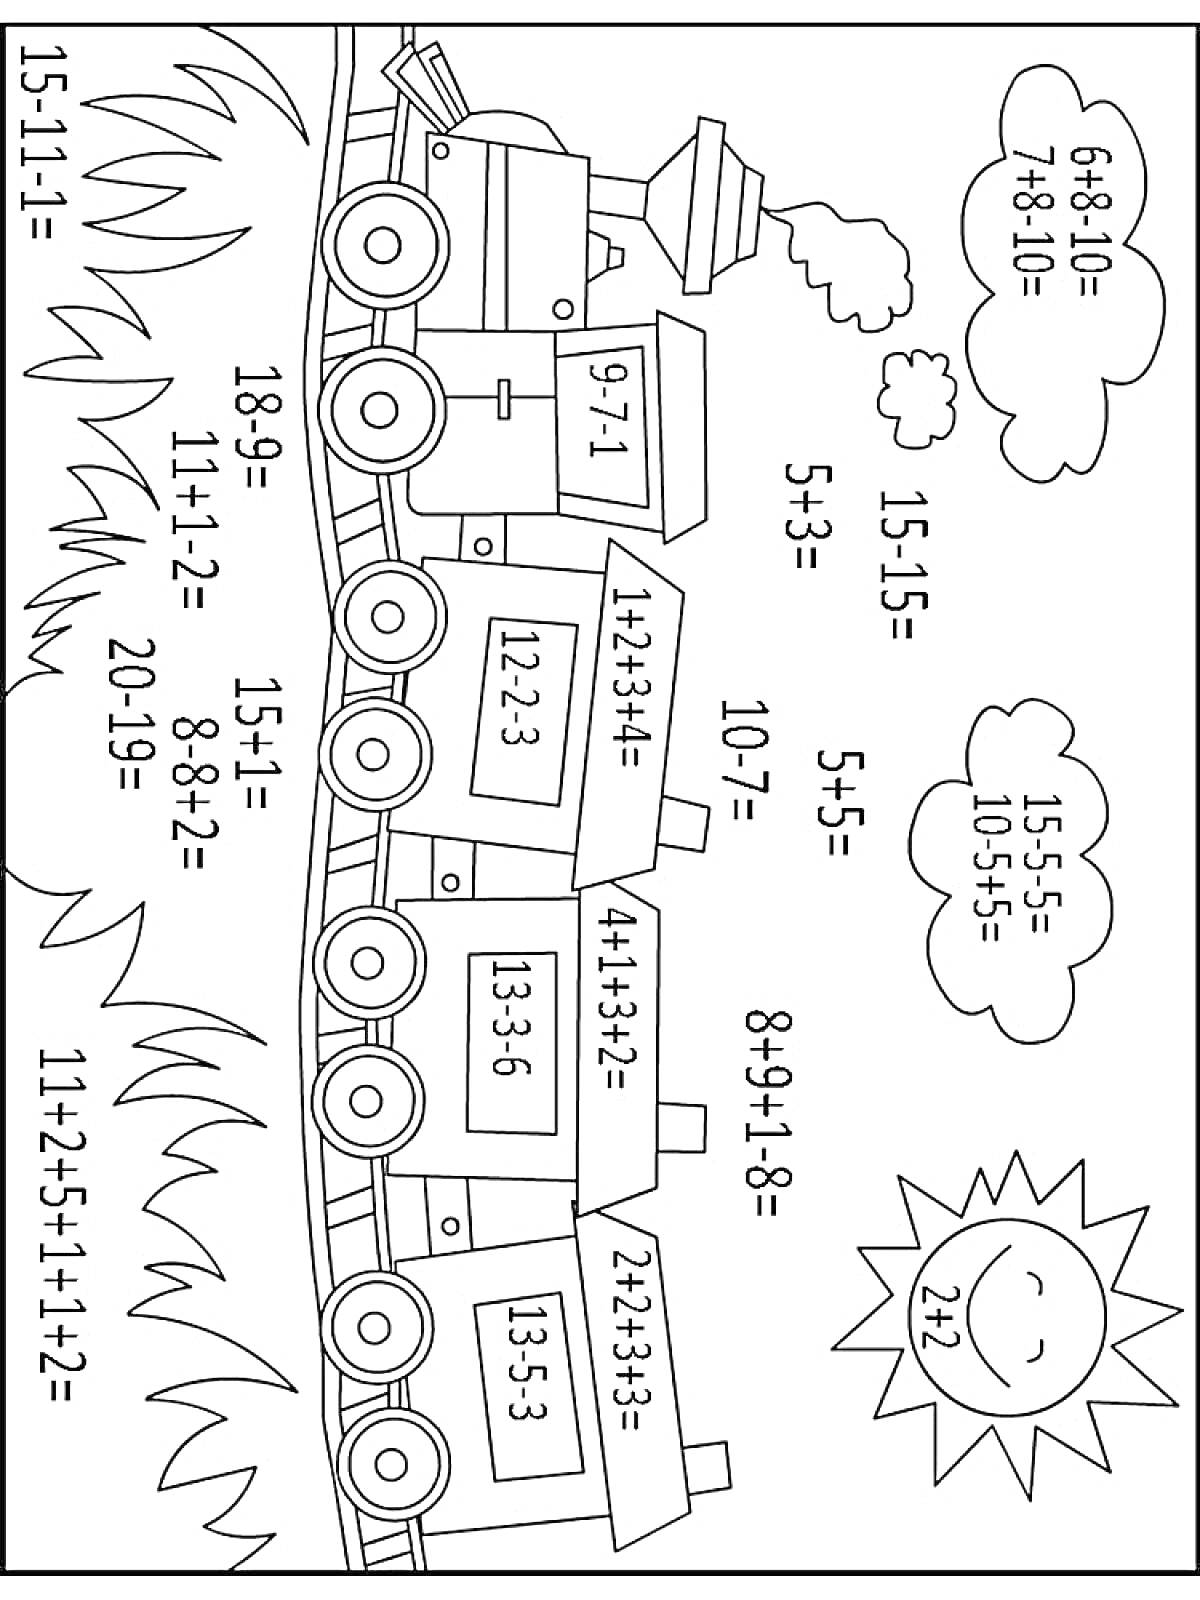 Раскраска Поезд с математическими примерами, включающий траву, солнце и облака с примерами